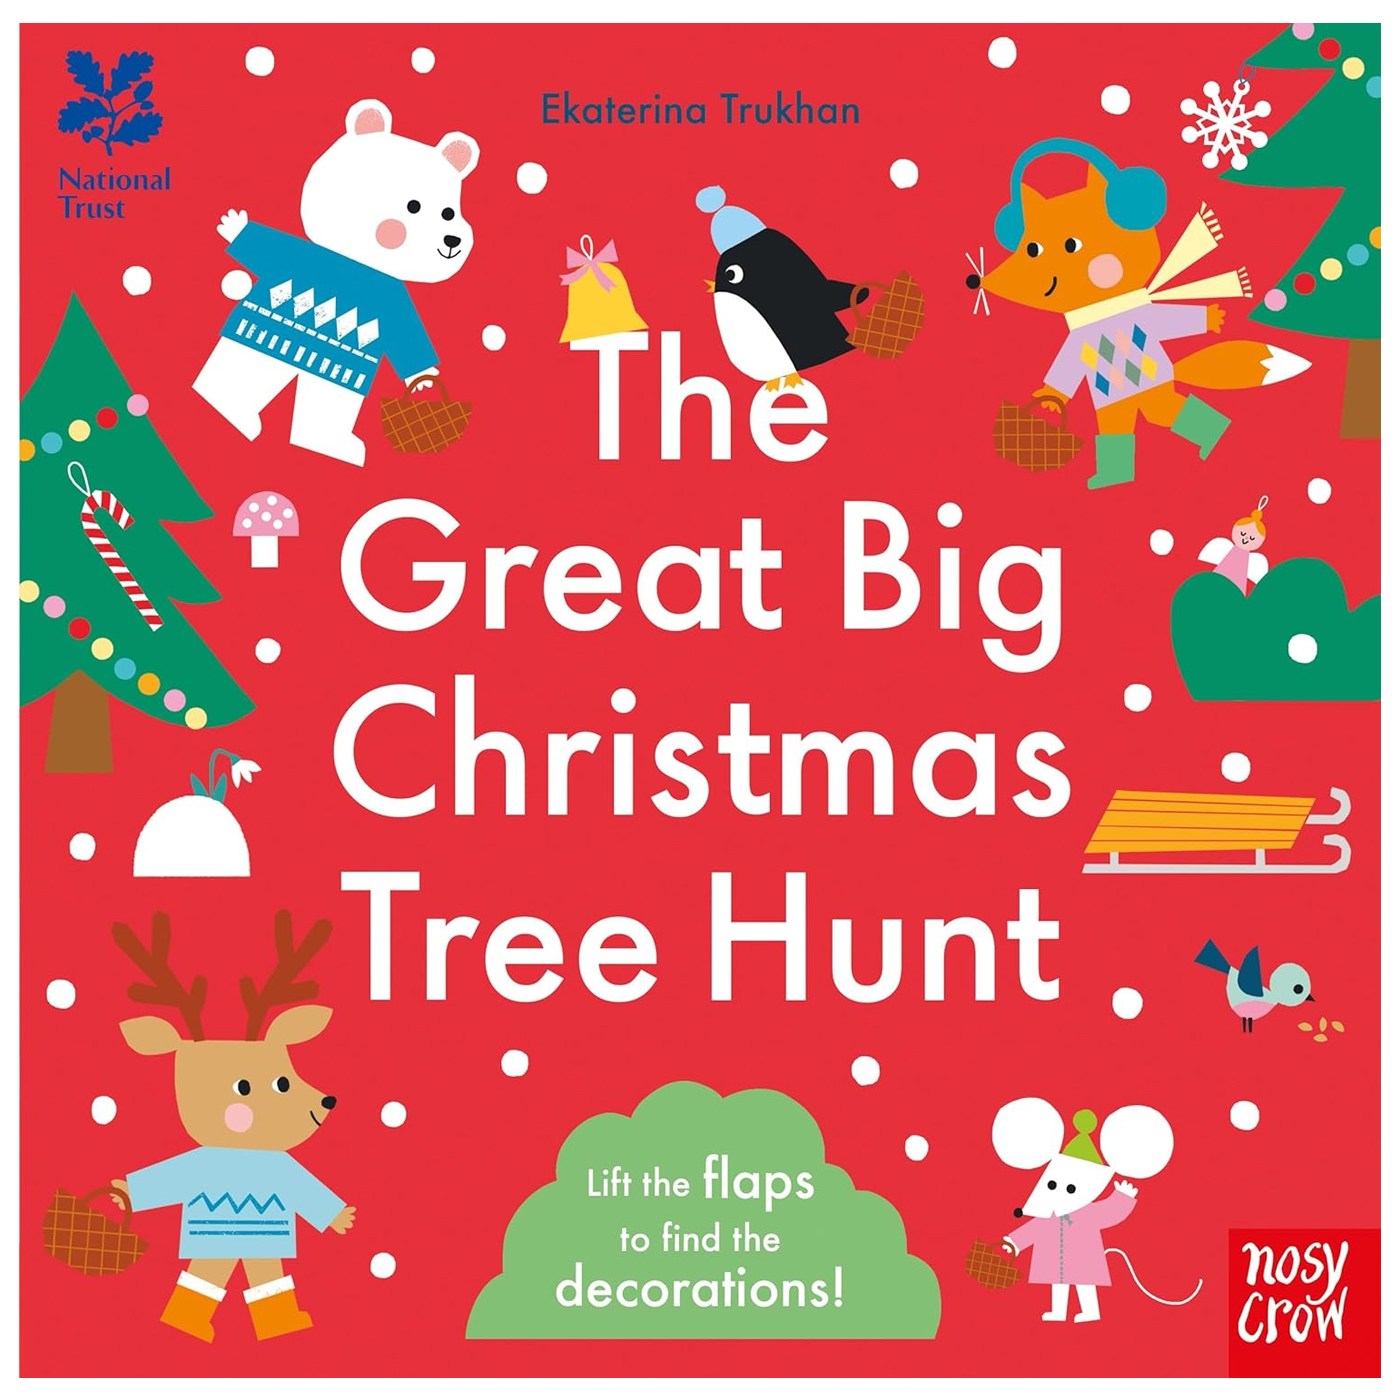  The Great Big Christmas Tree Hunt